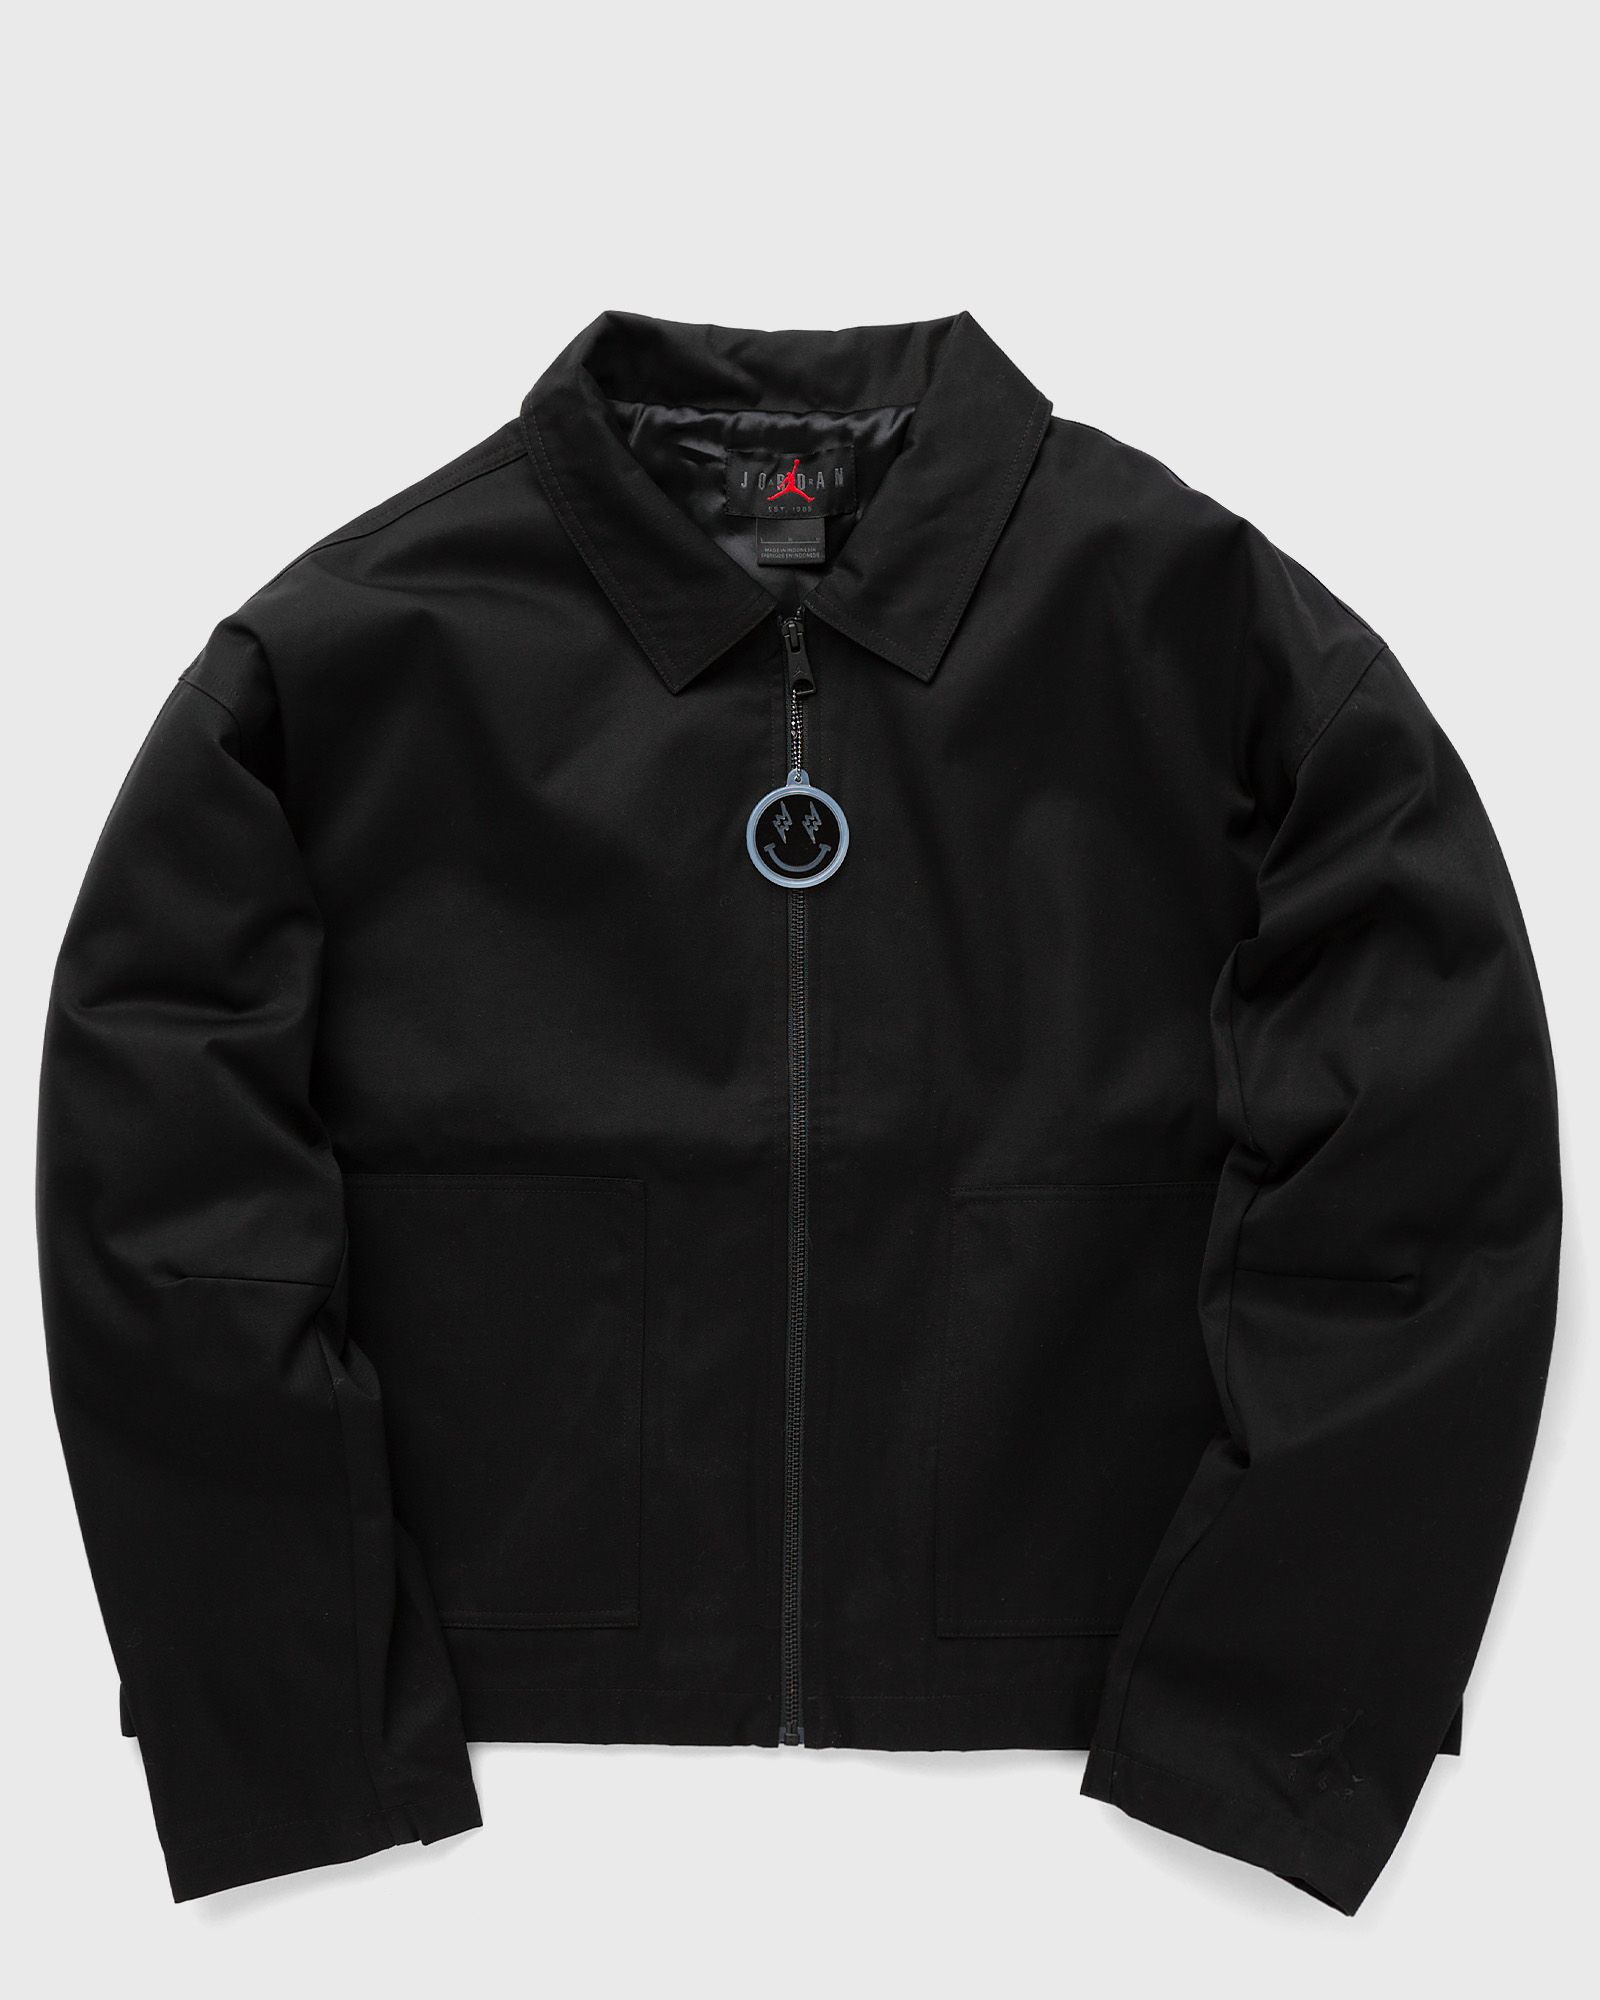 Jordan - x j balvin woven jacket men overshirts|windbreaker black in größe:s